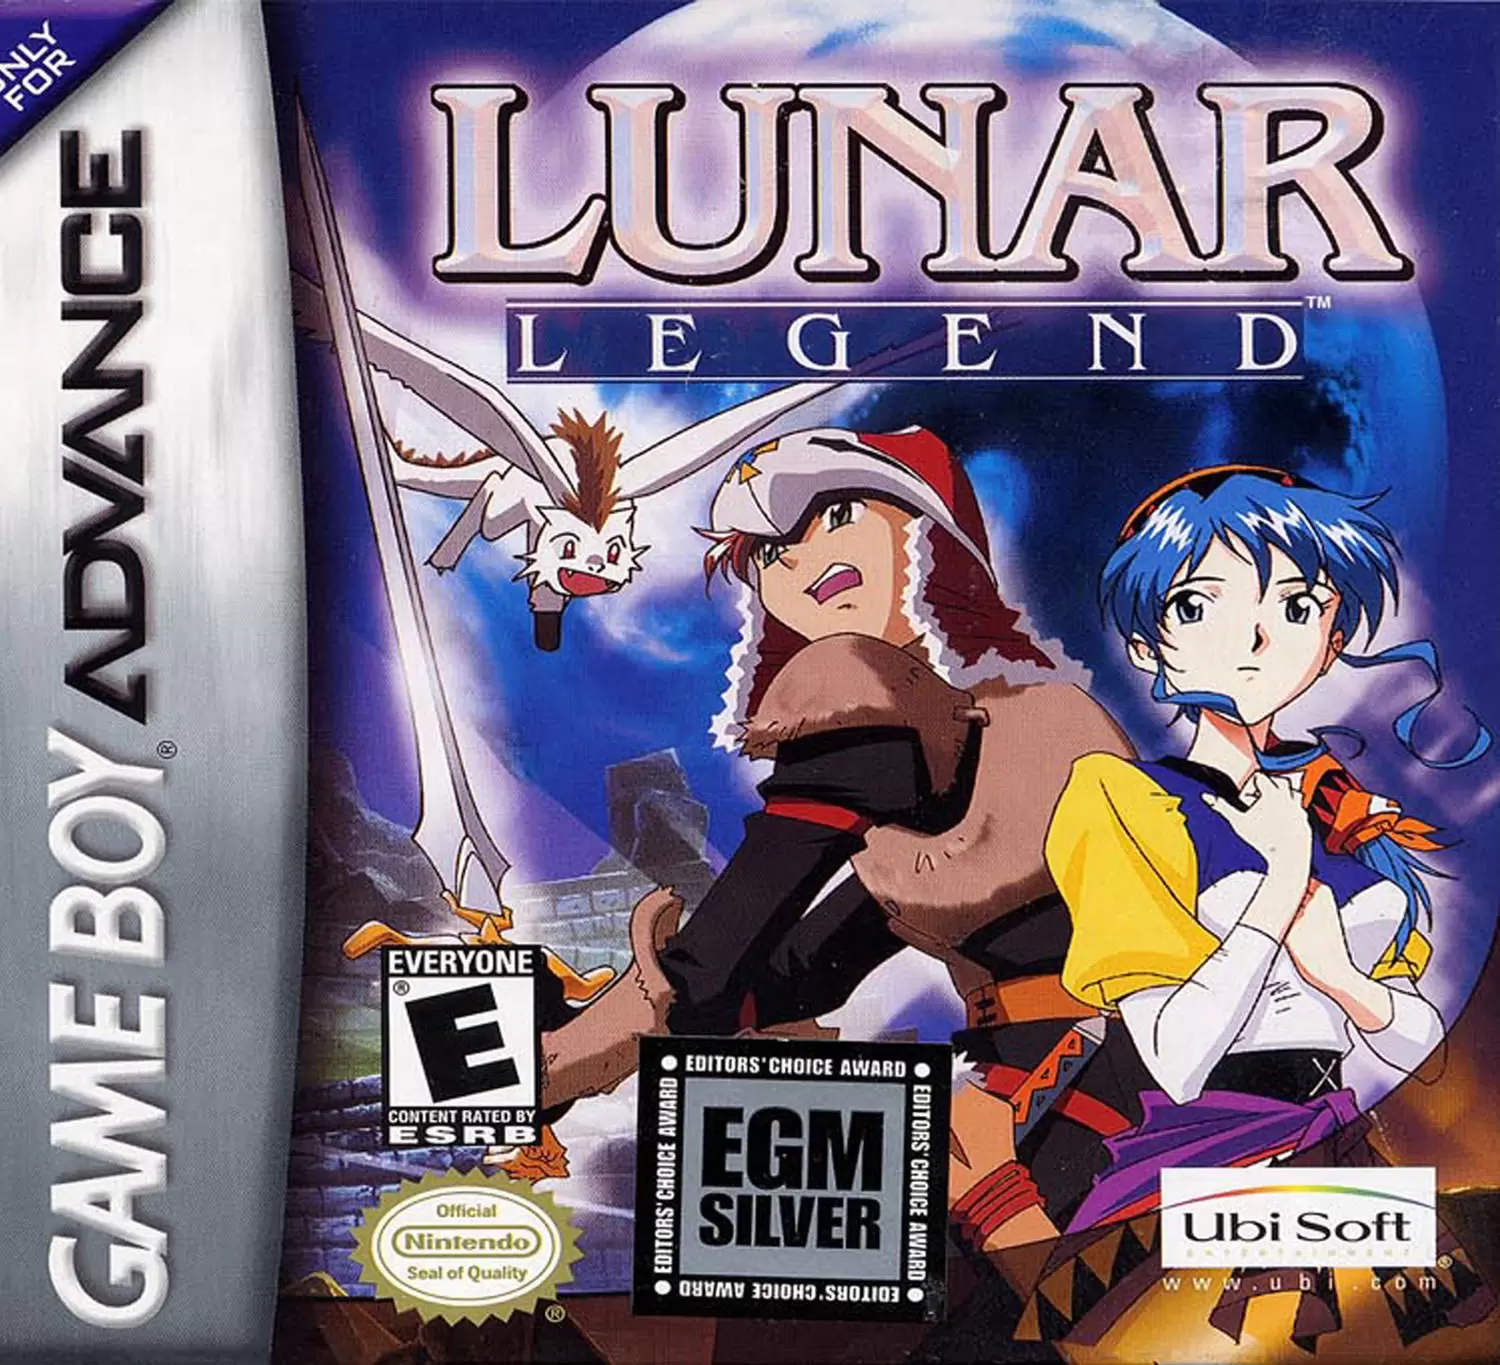 Game Boy Advance Games - Lunar Legend